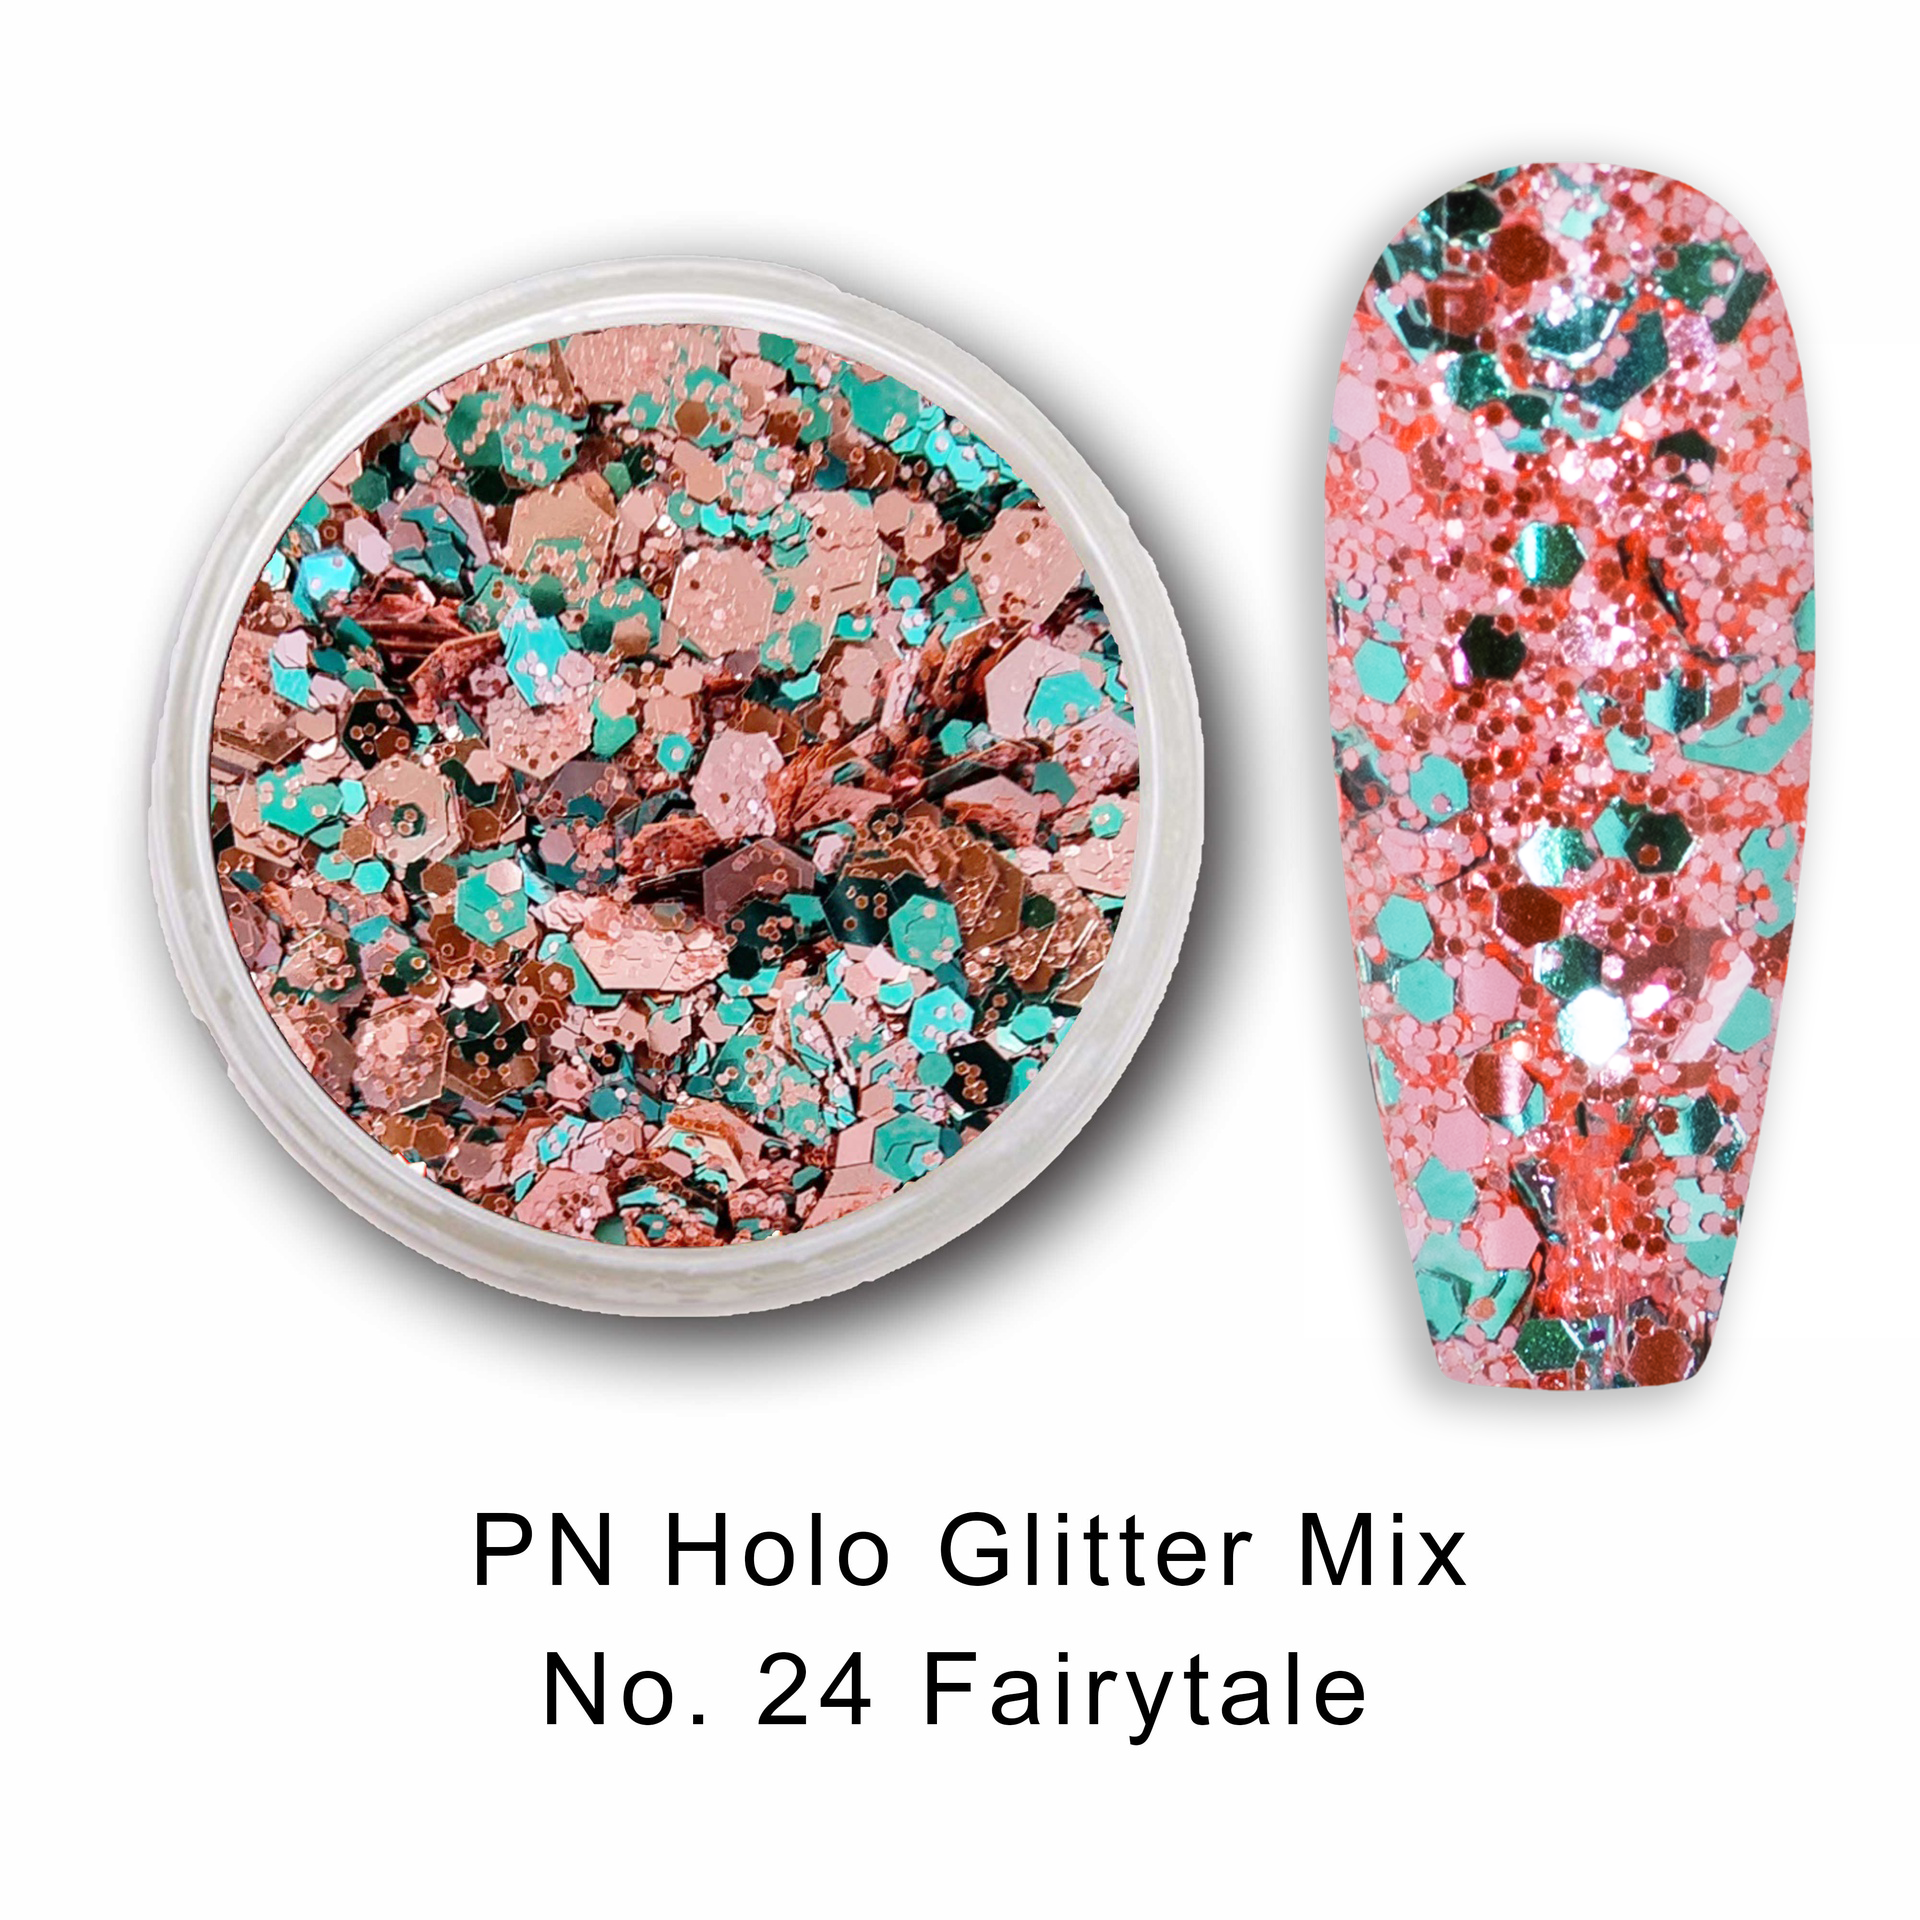 PN Holo glitter mix No.24 Fairytale